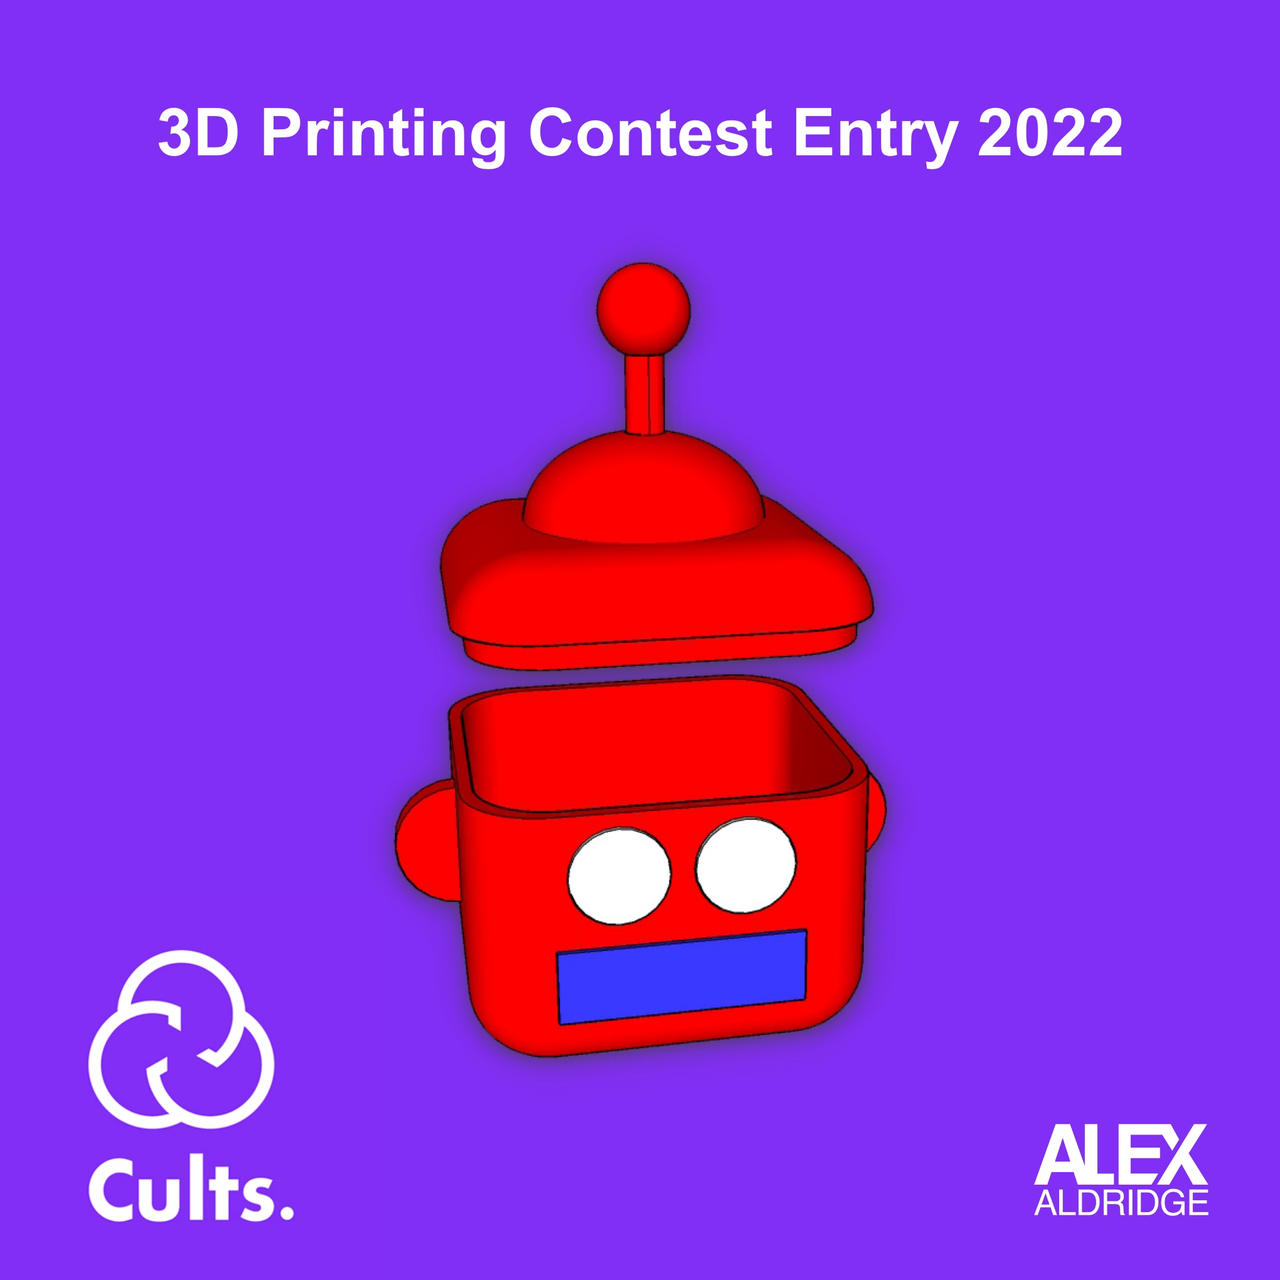 3D Printing Meme by 4lex4ldridge on DeviantArt